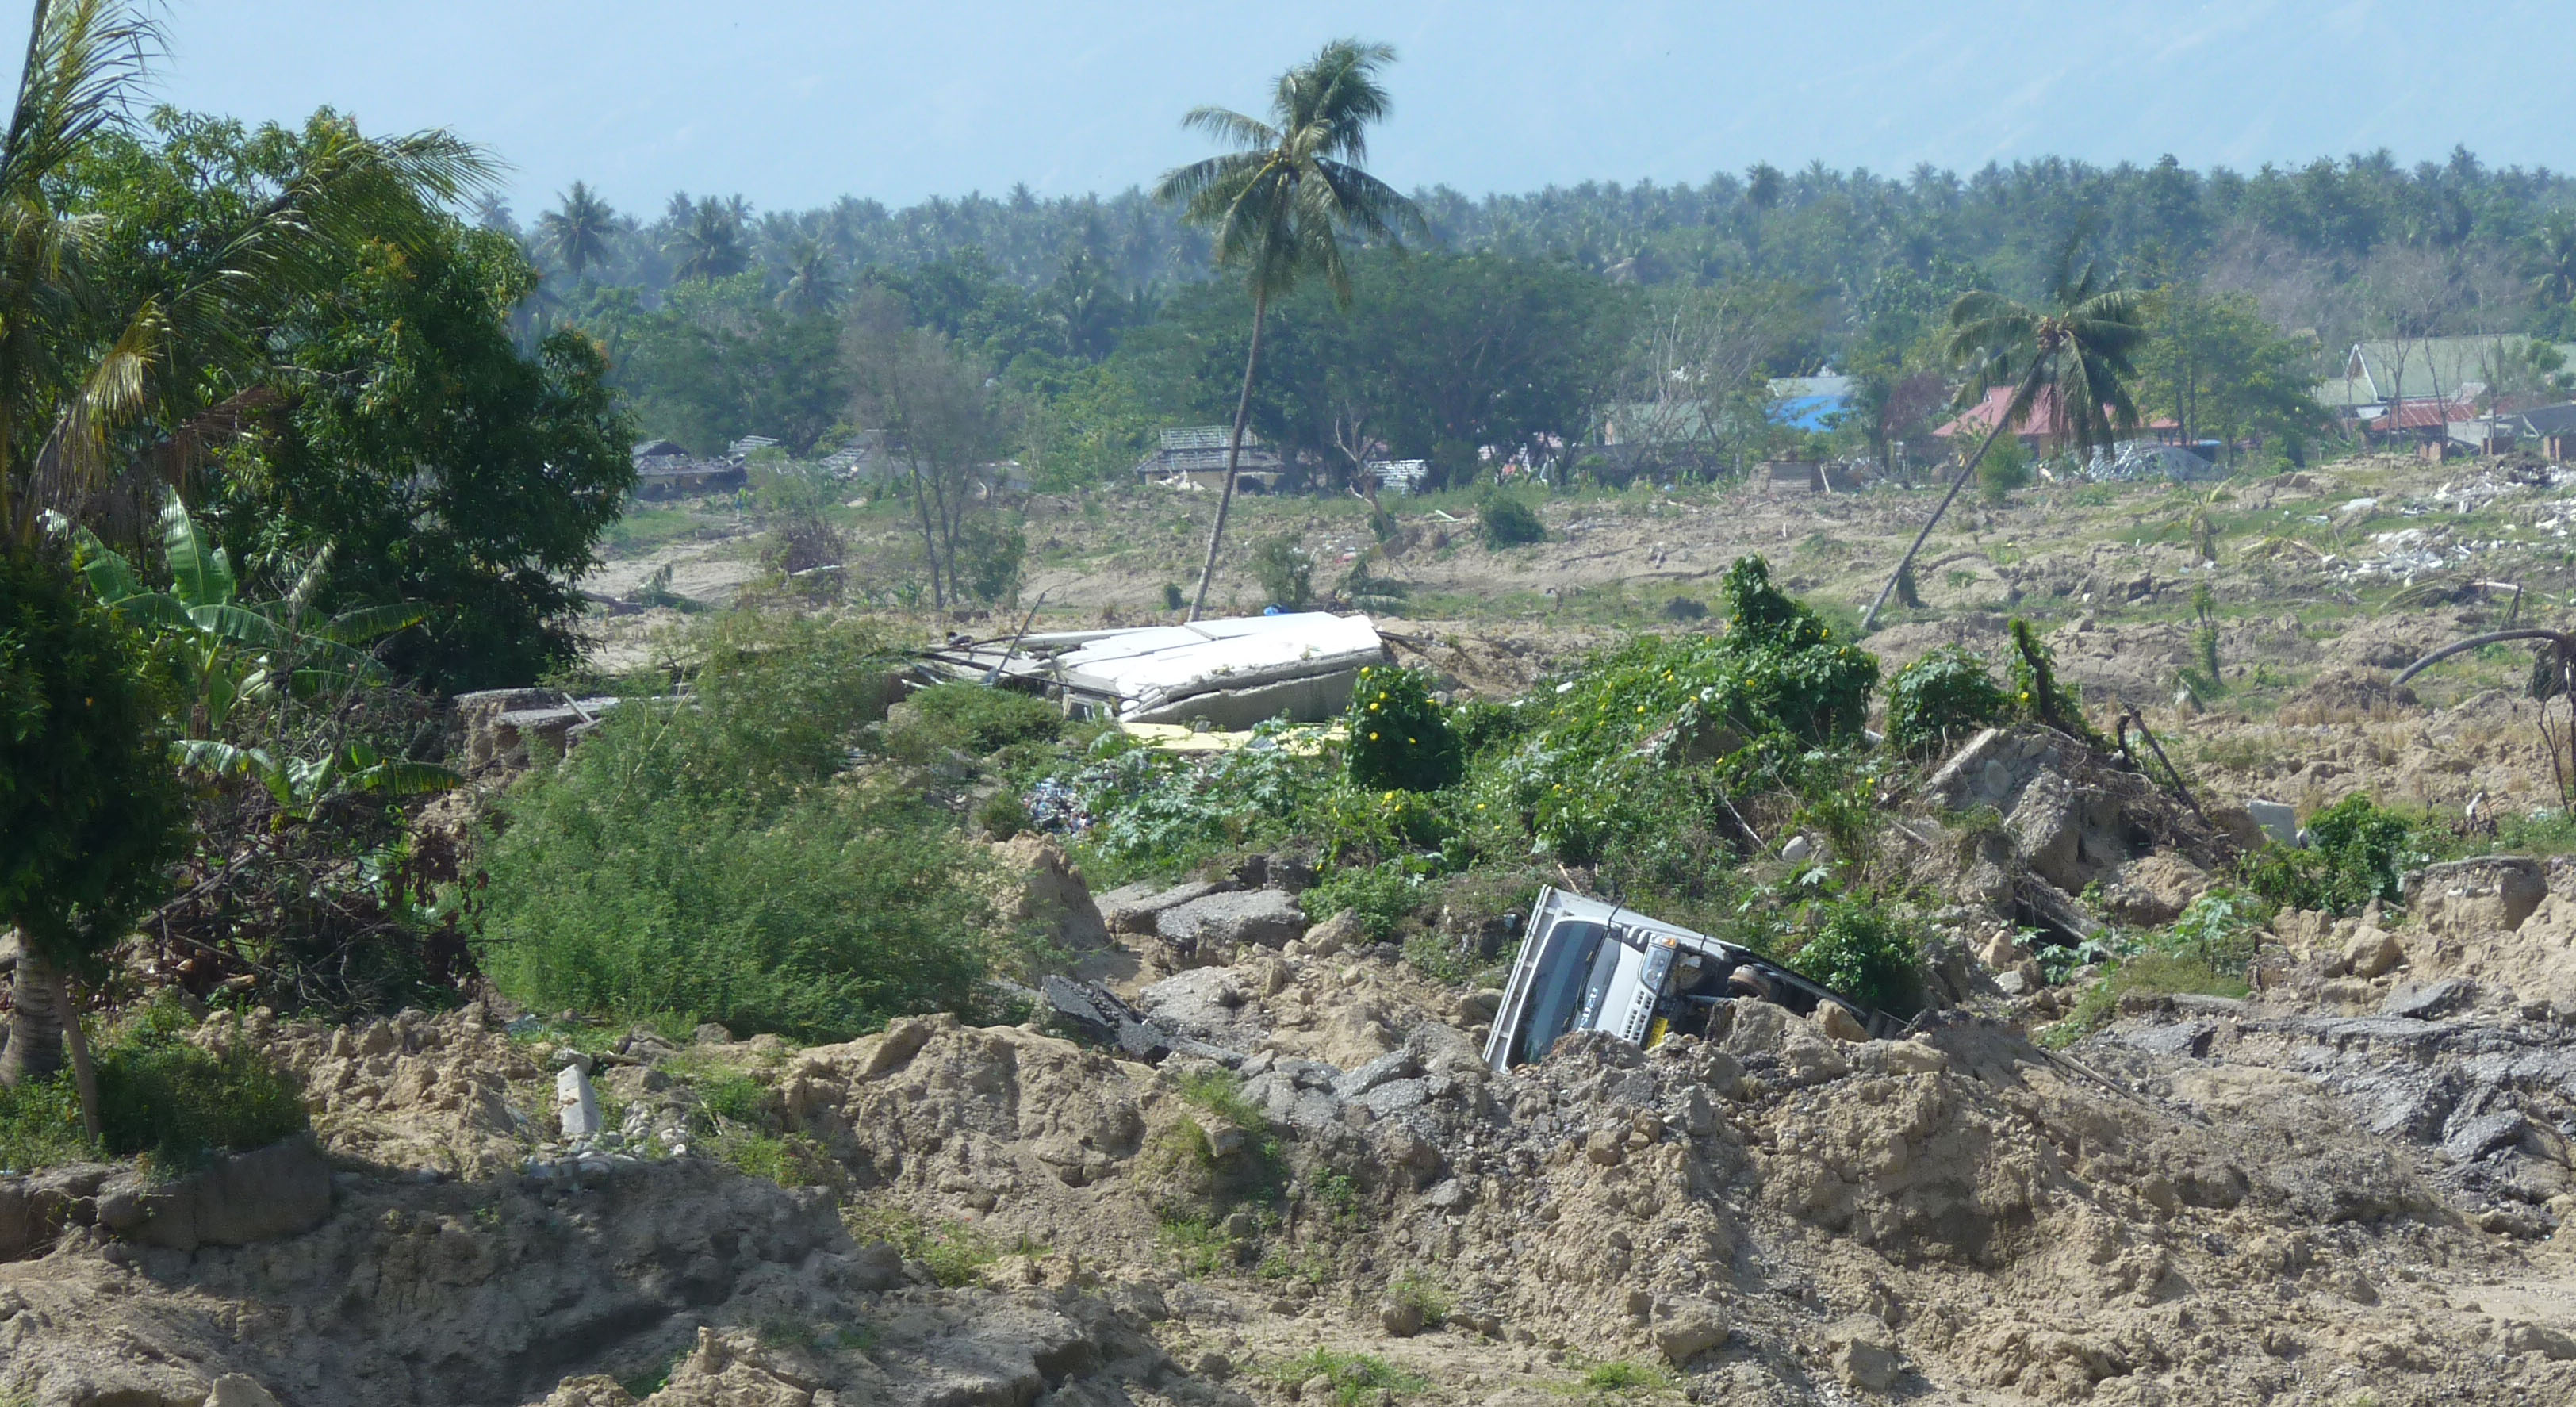 Landslide at the village of Petobo in Indonesia